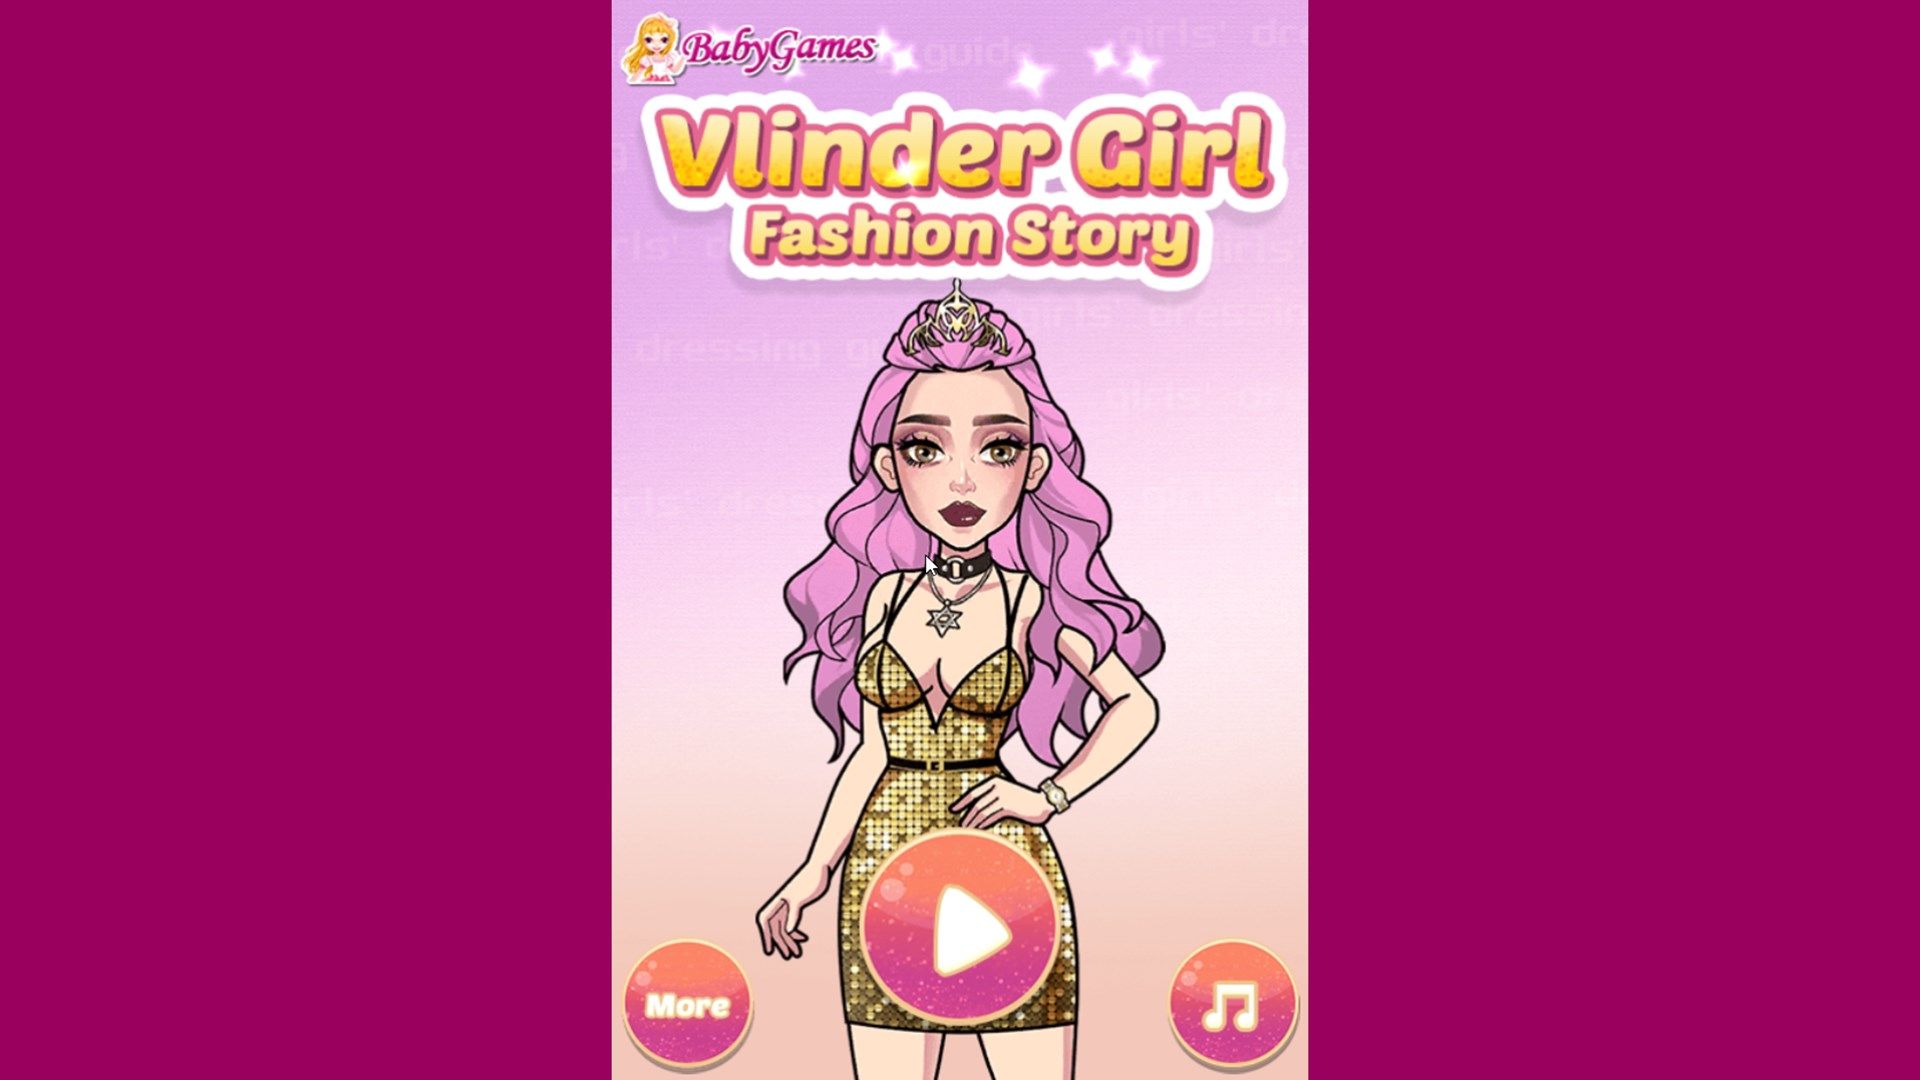 Vlinder Girl Fashion Story